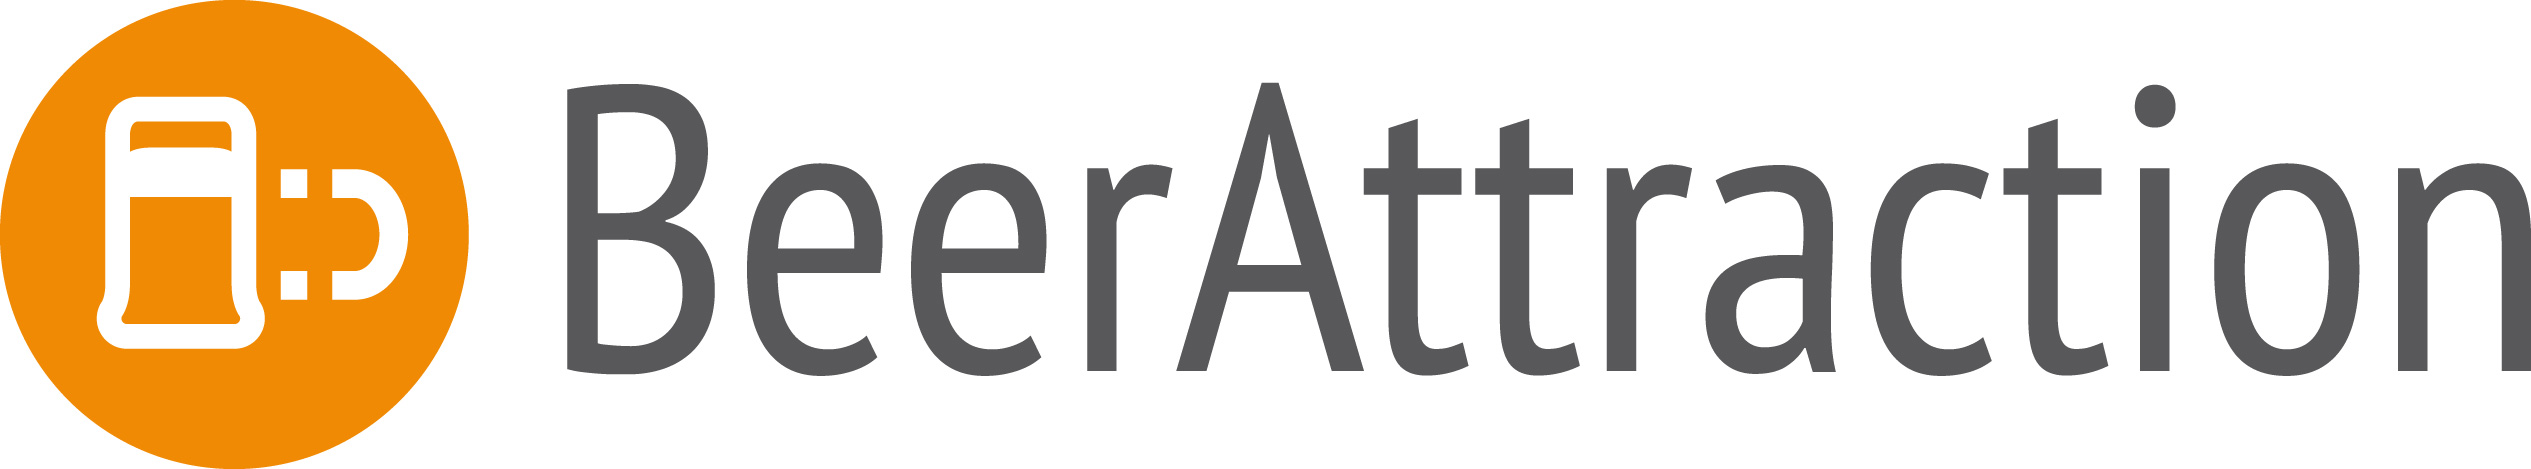 beerattraction-logo